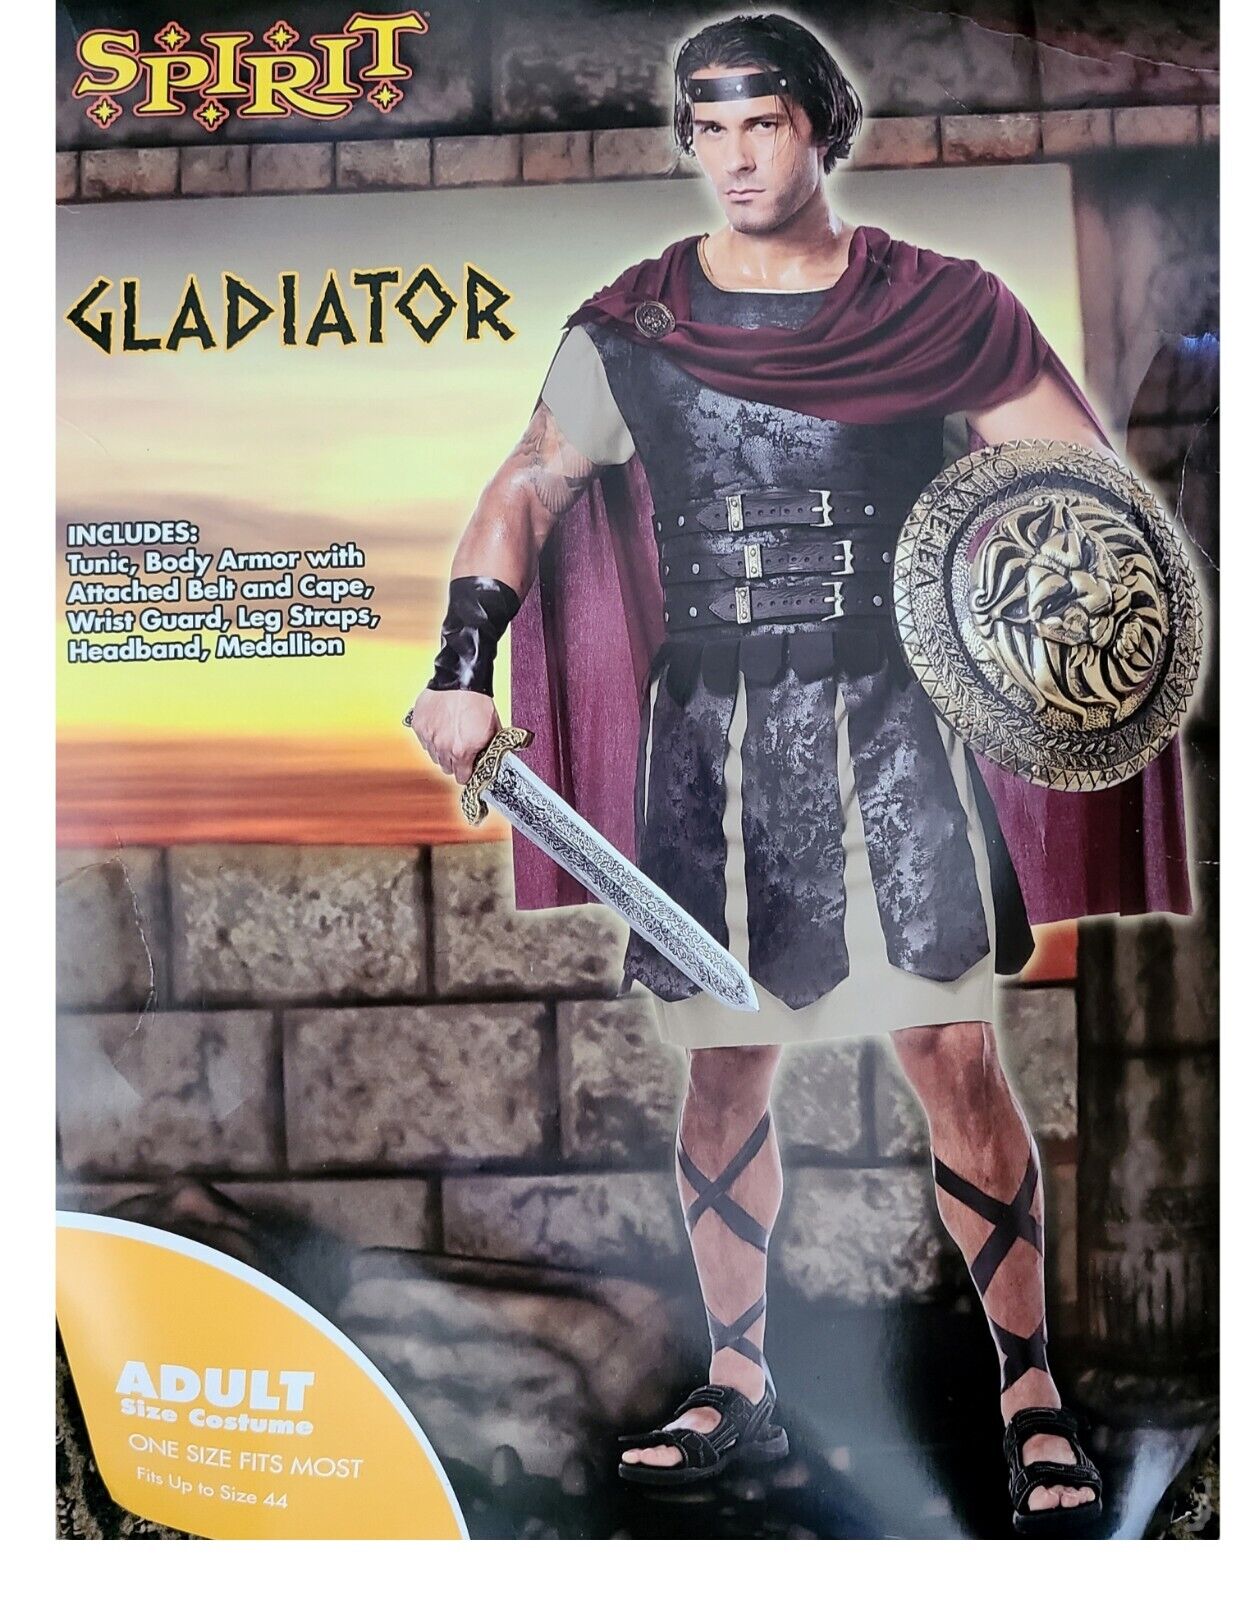 NEW Spirit Halloween Adult Men's Gladiator Costume One Size Fits 